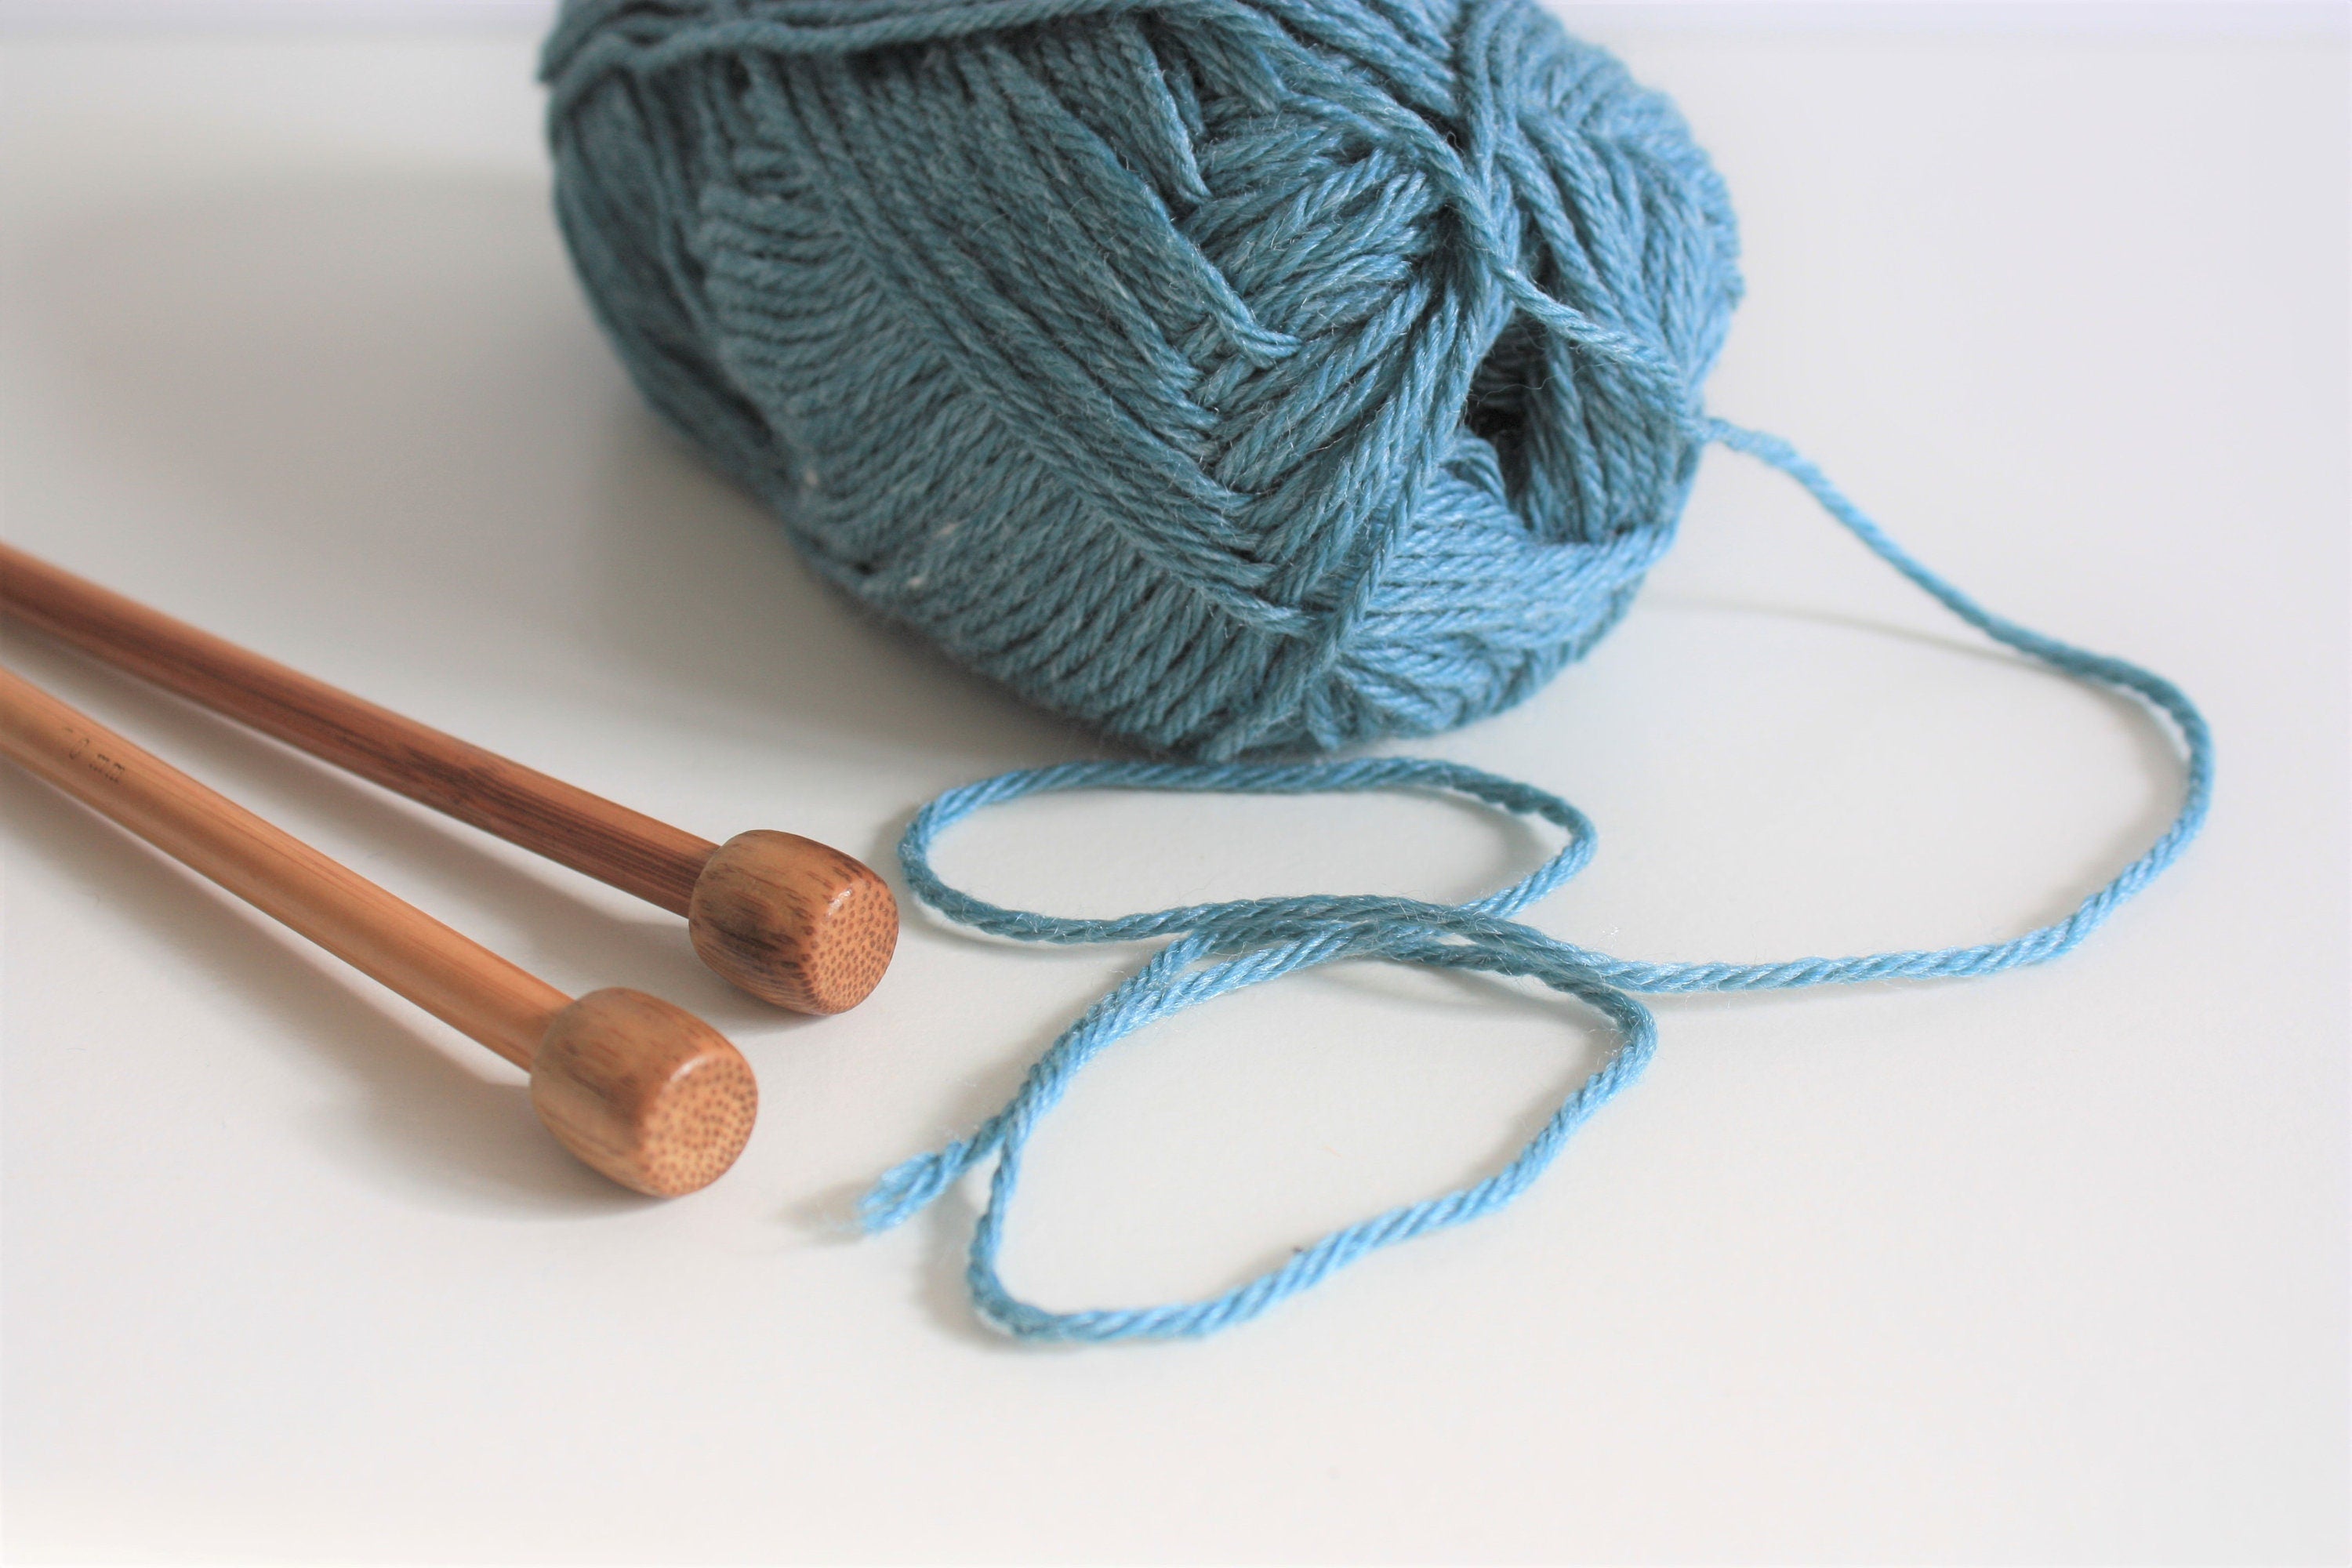 Knitting & Crochet Yarn, Worsted/Aran Weight Merino Silk Yarn